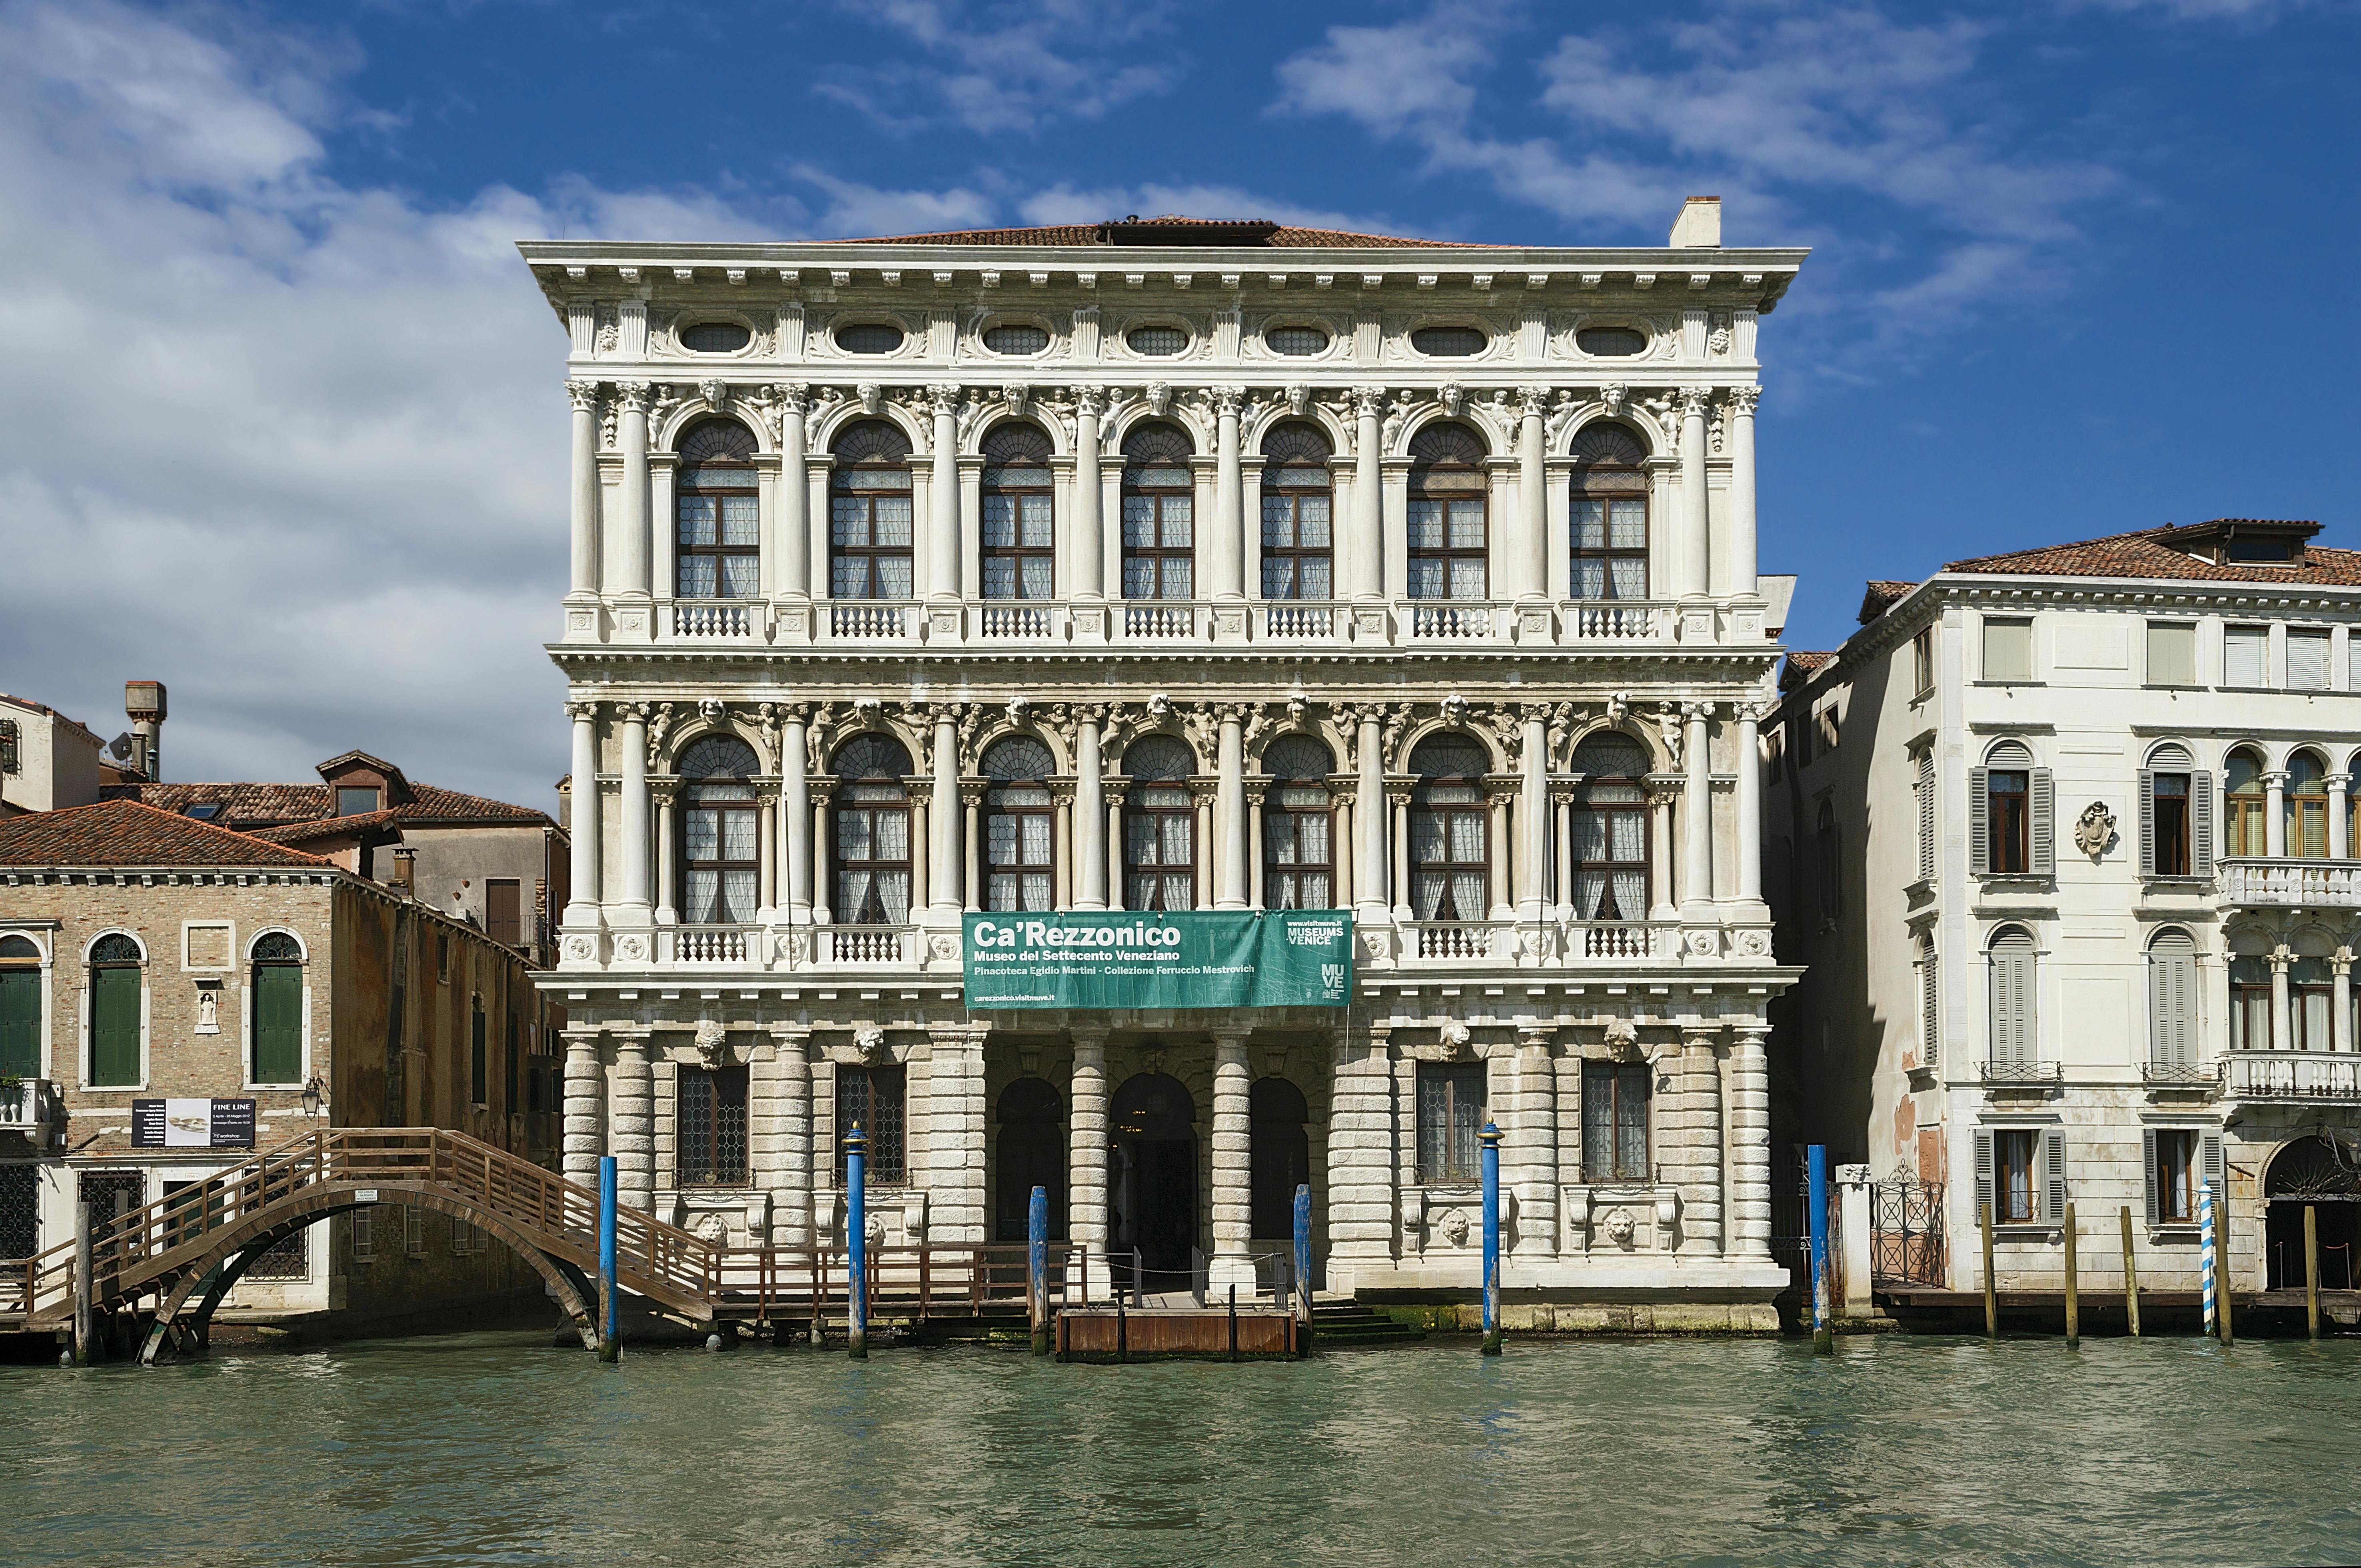 Ca' Rezzonico 18th century Venice Museum entrance tickets